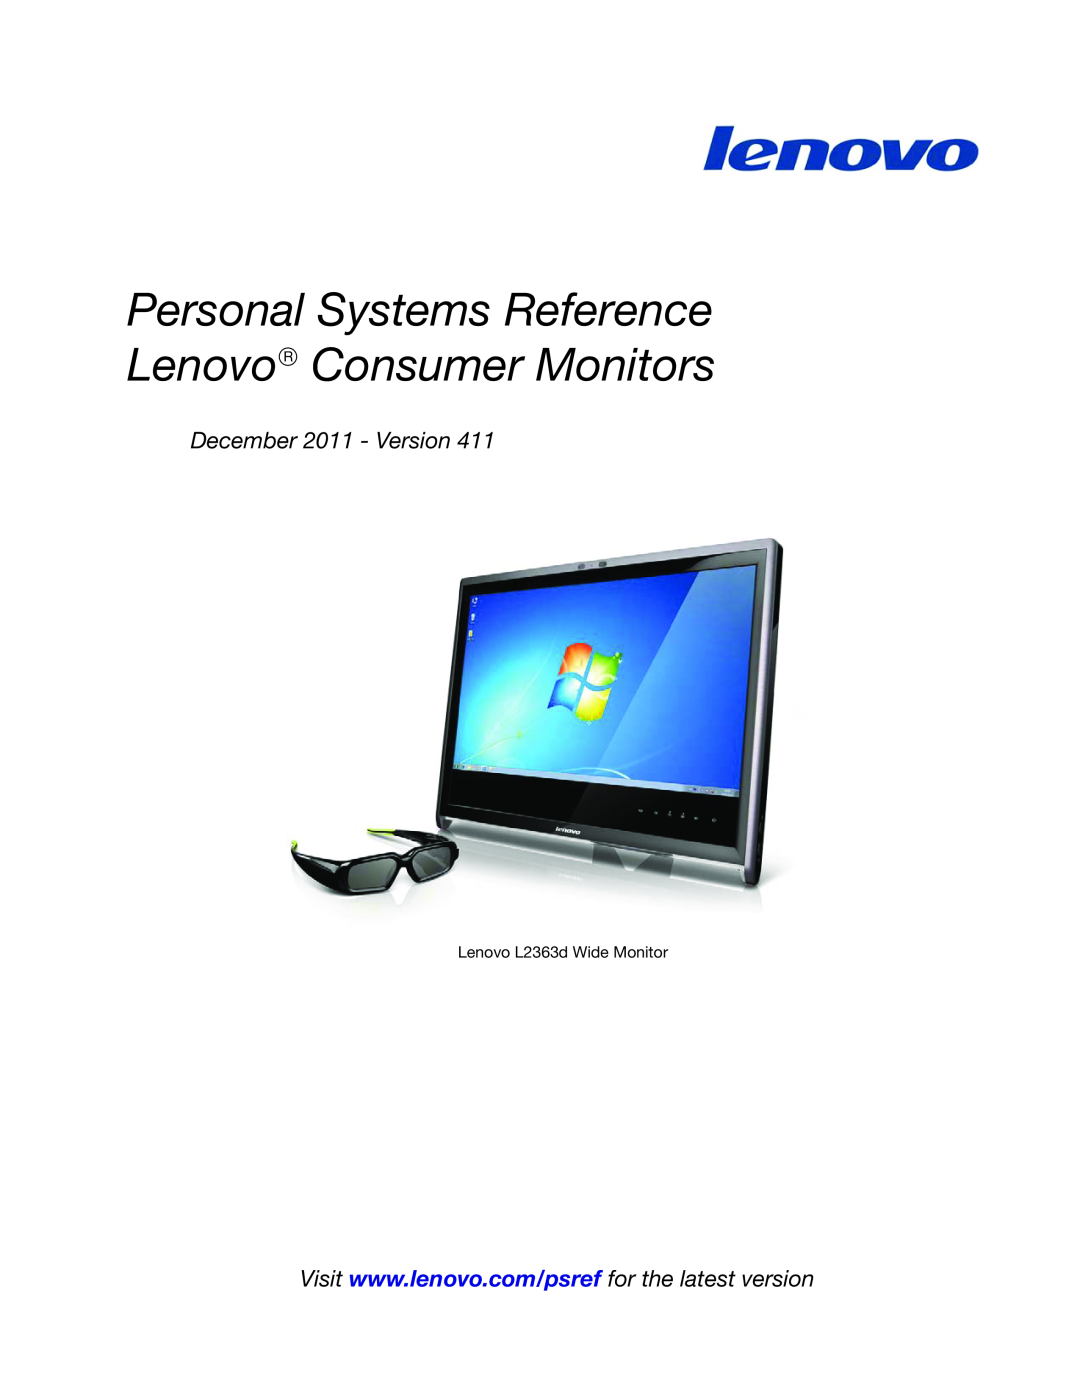 Lenovo L2363D manual Personal Systems Reference, Lenovo→ Consumer Monitors 2005 -2012Withdrawn, Lenovo L2363d Wide Monitor 